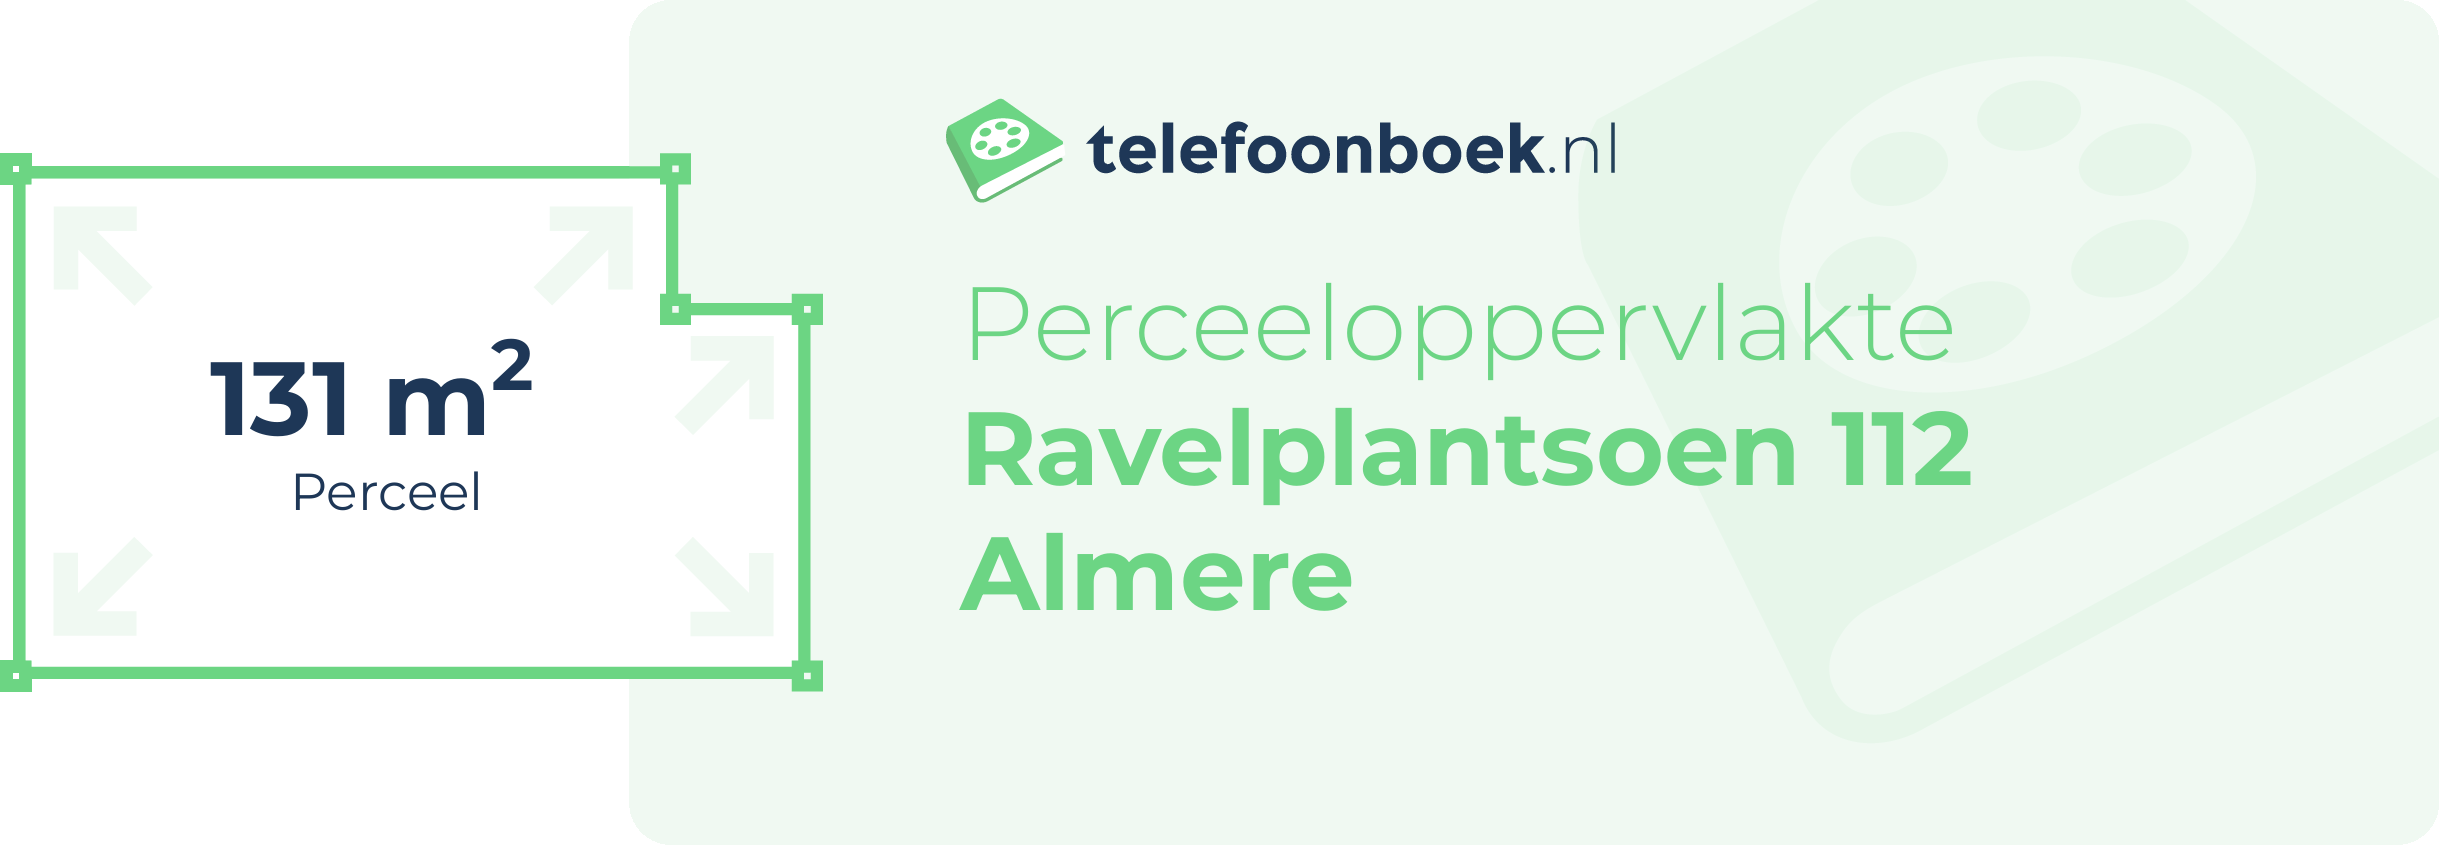 Perceeloppervlakte Ravelplantsoen 112 Almere